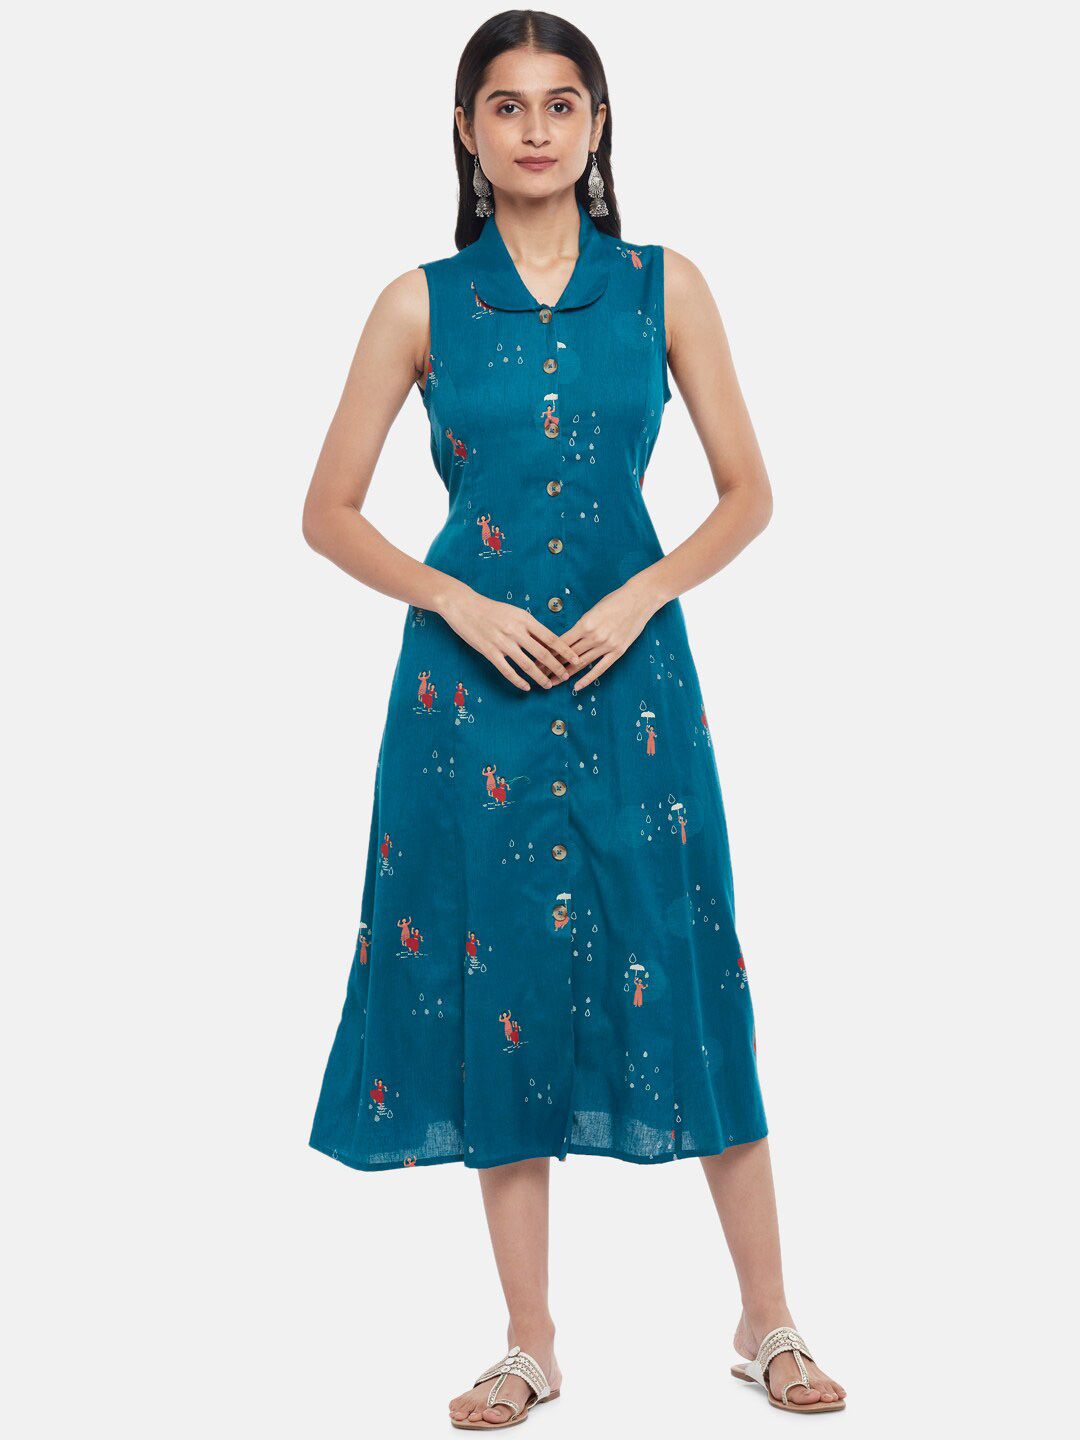 AKKRITI BY PANTALOONS Teal Midi Dress Price in India